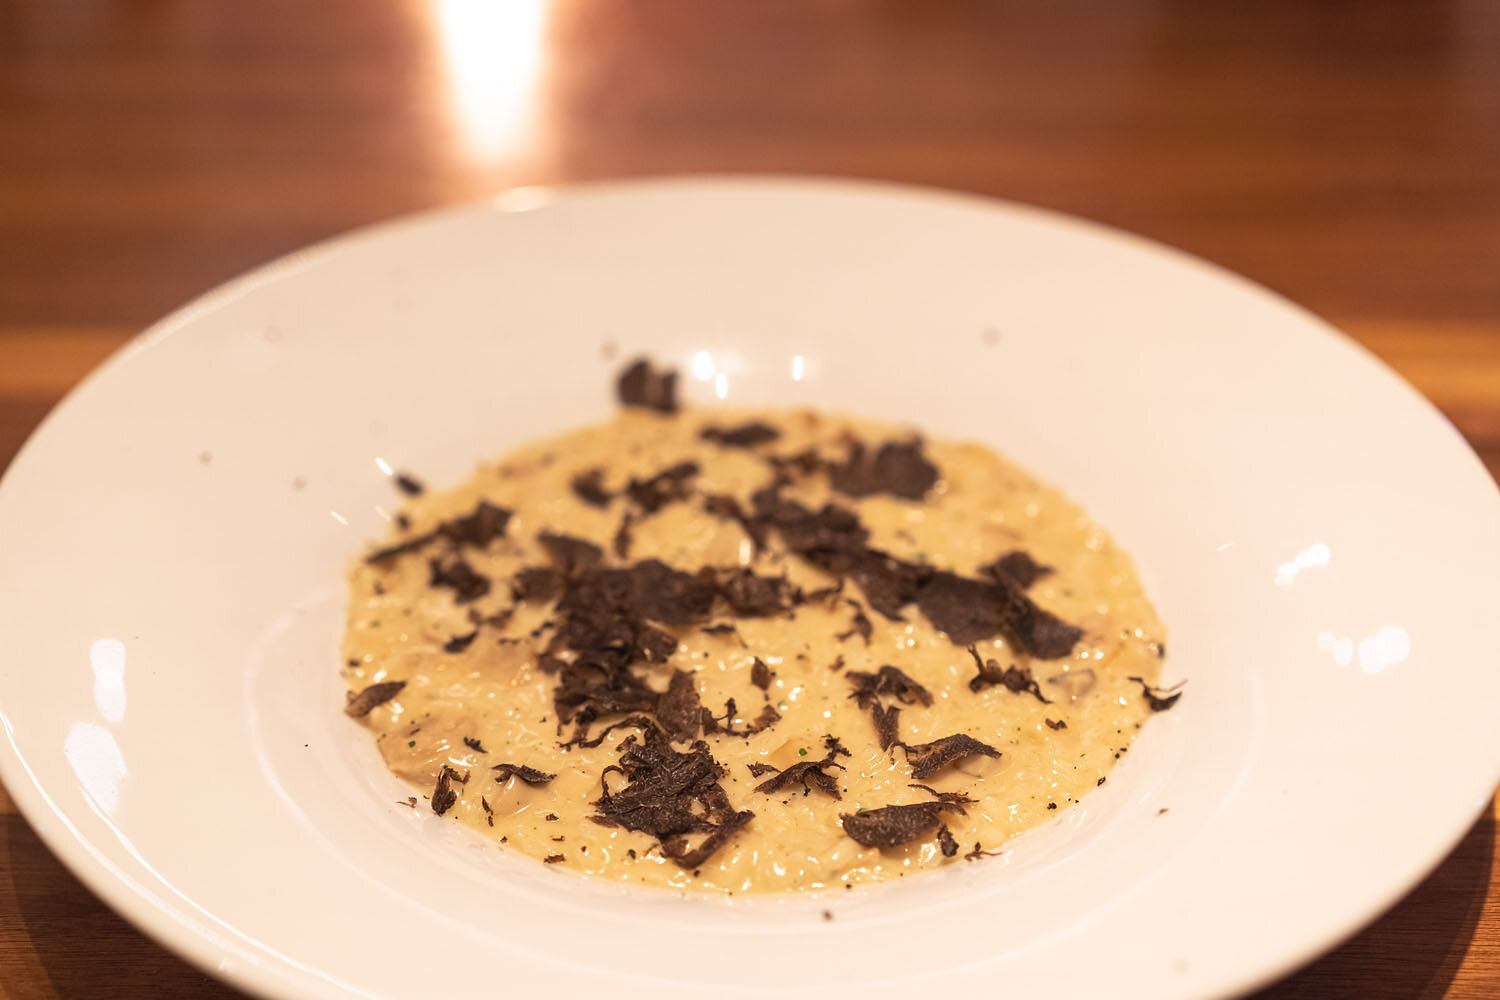  Main: Carnaroli rice, parmigiano reggiano, seasonal mushroom risotto and black truffle 